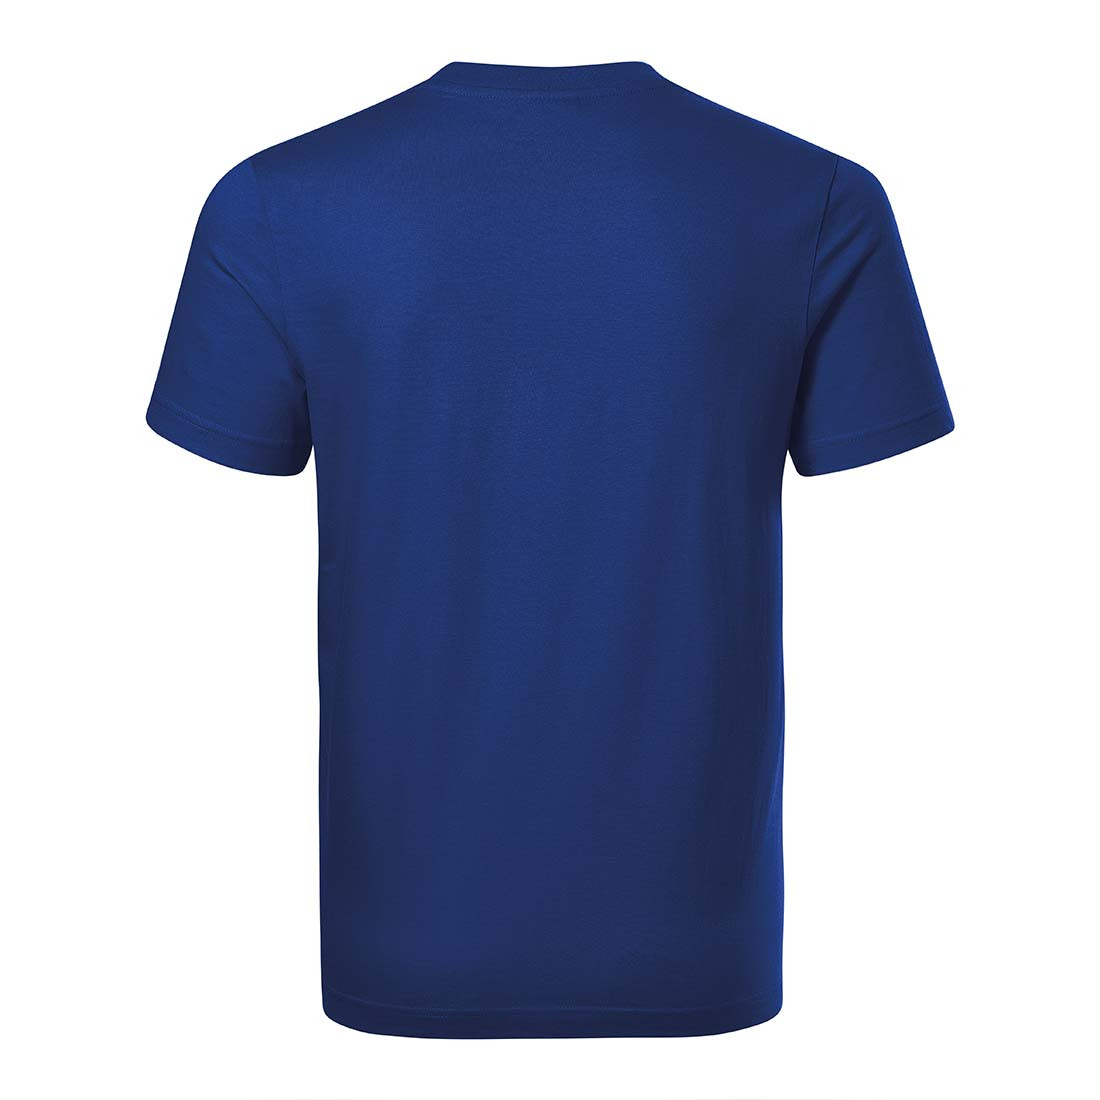 Camiseta unisex RECALL - Ropa de protección